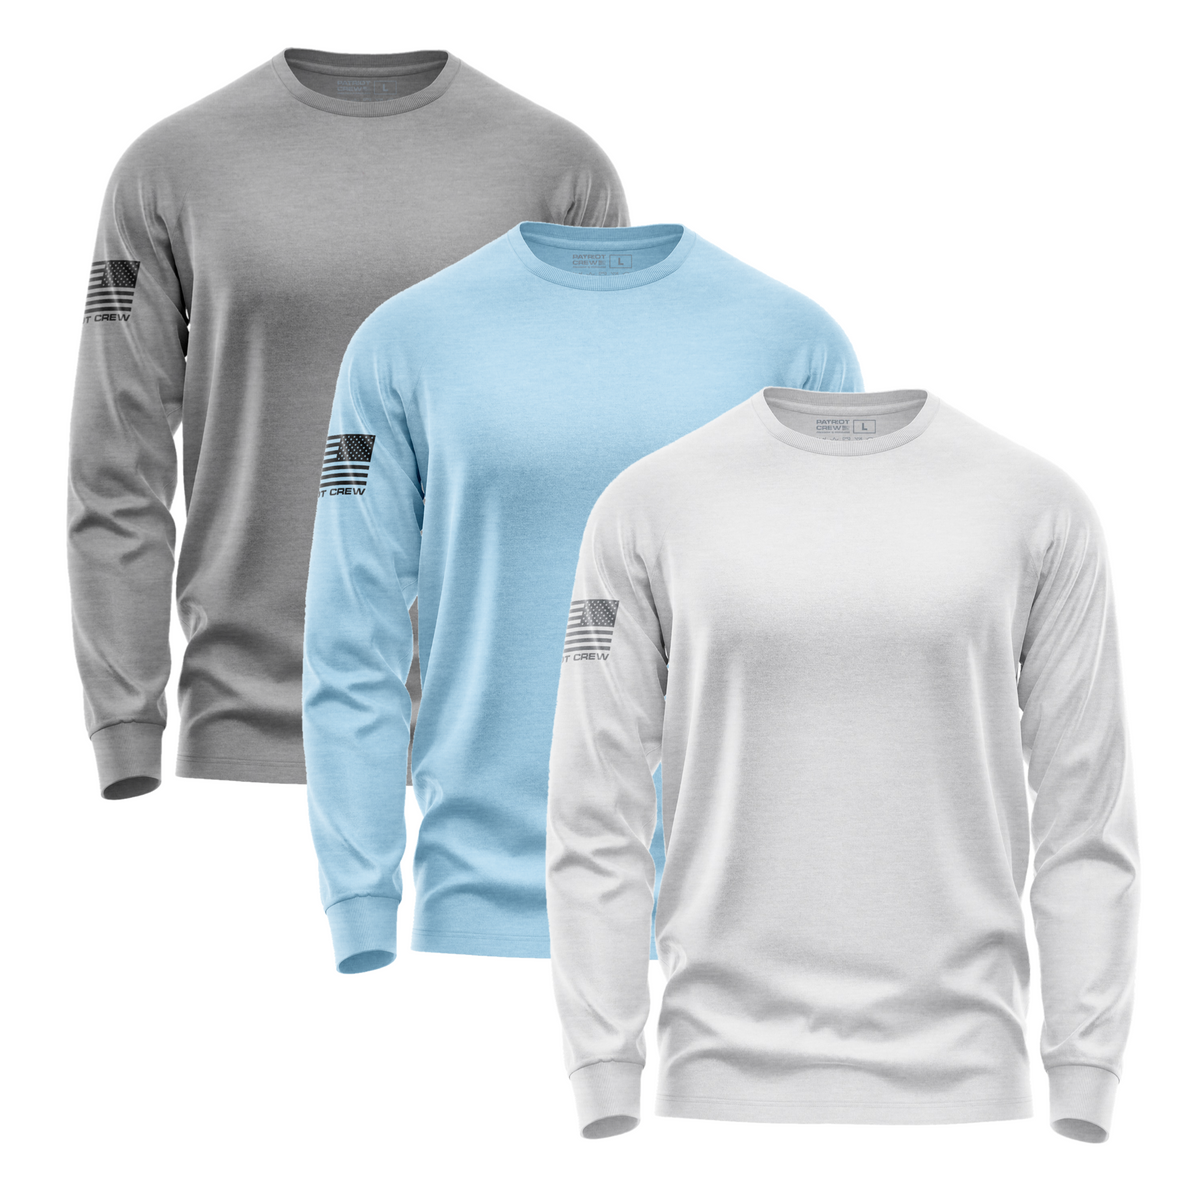 Winter Hues Long-Sleeve T-Shirt (3 Pack)